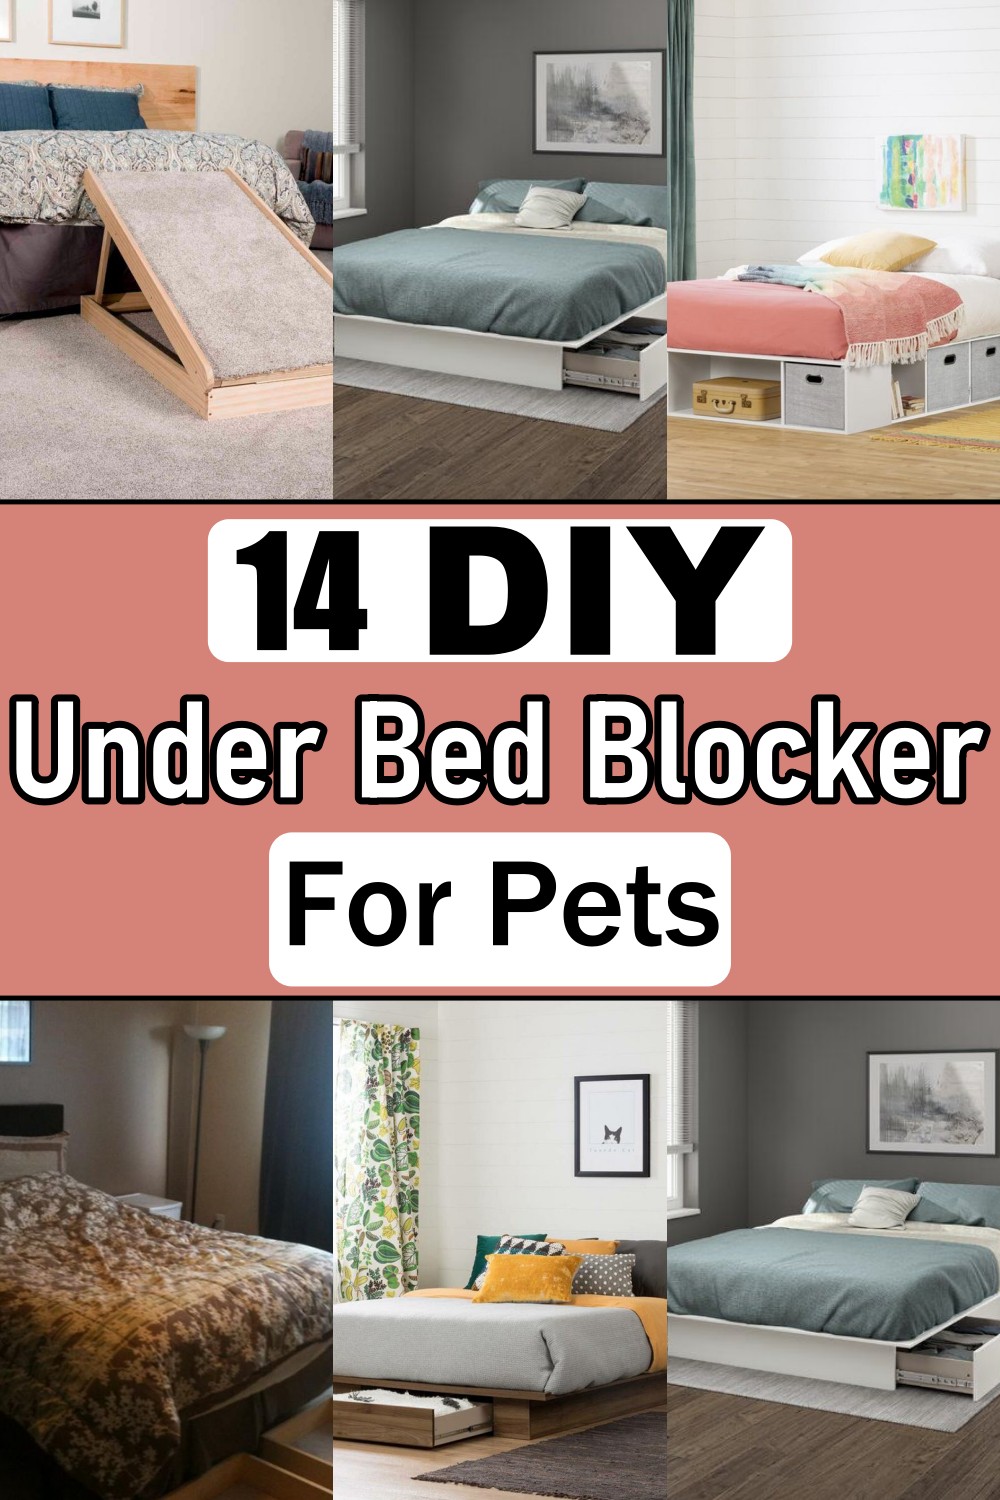 Under Bed Blocker For Pets